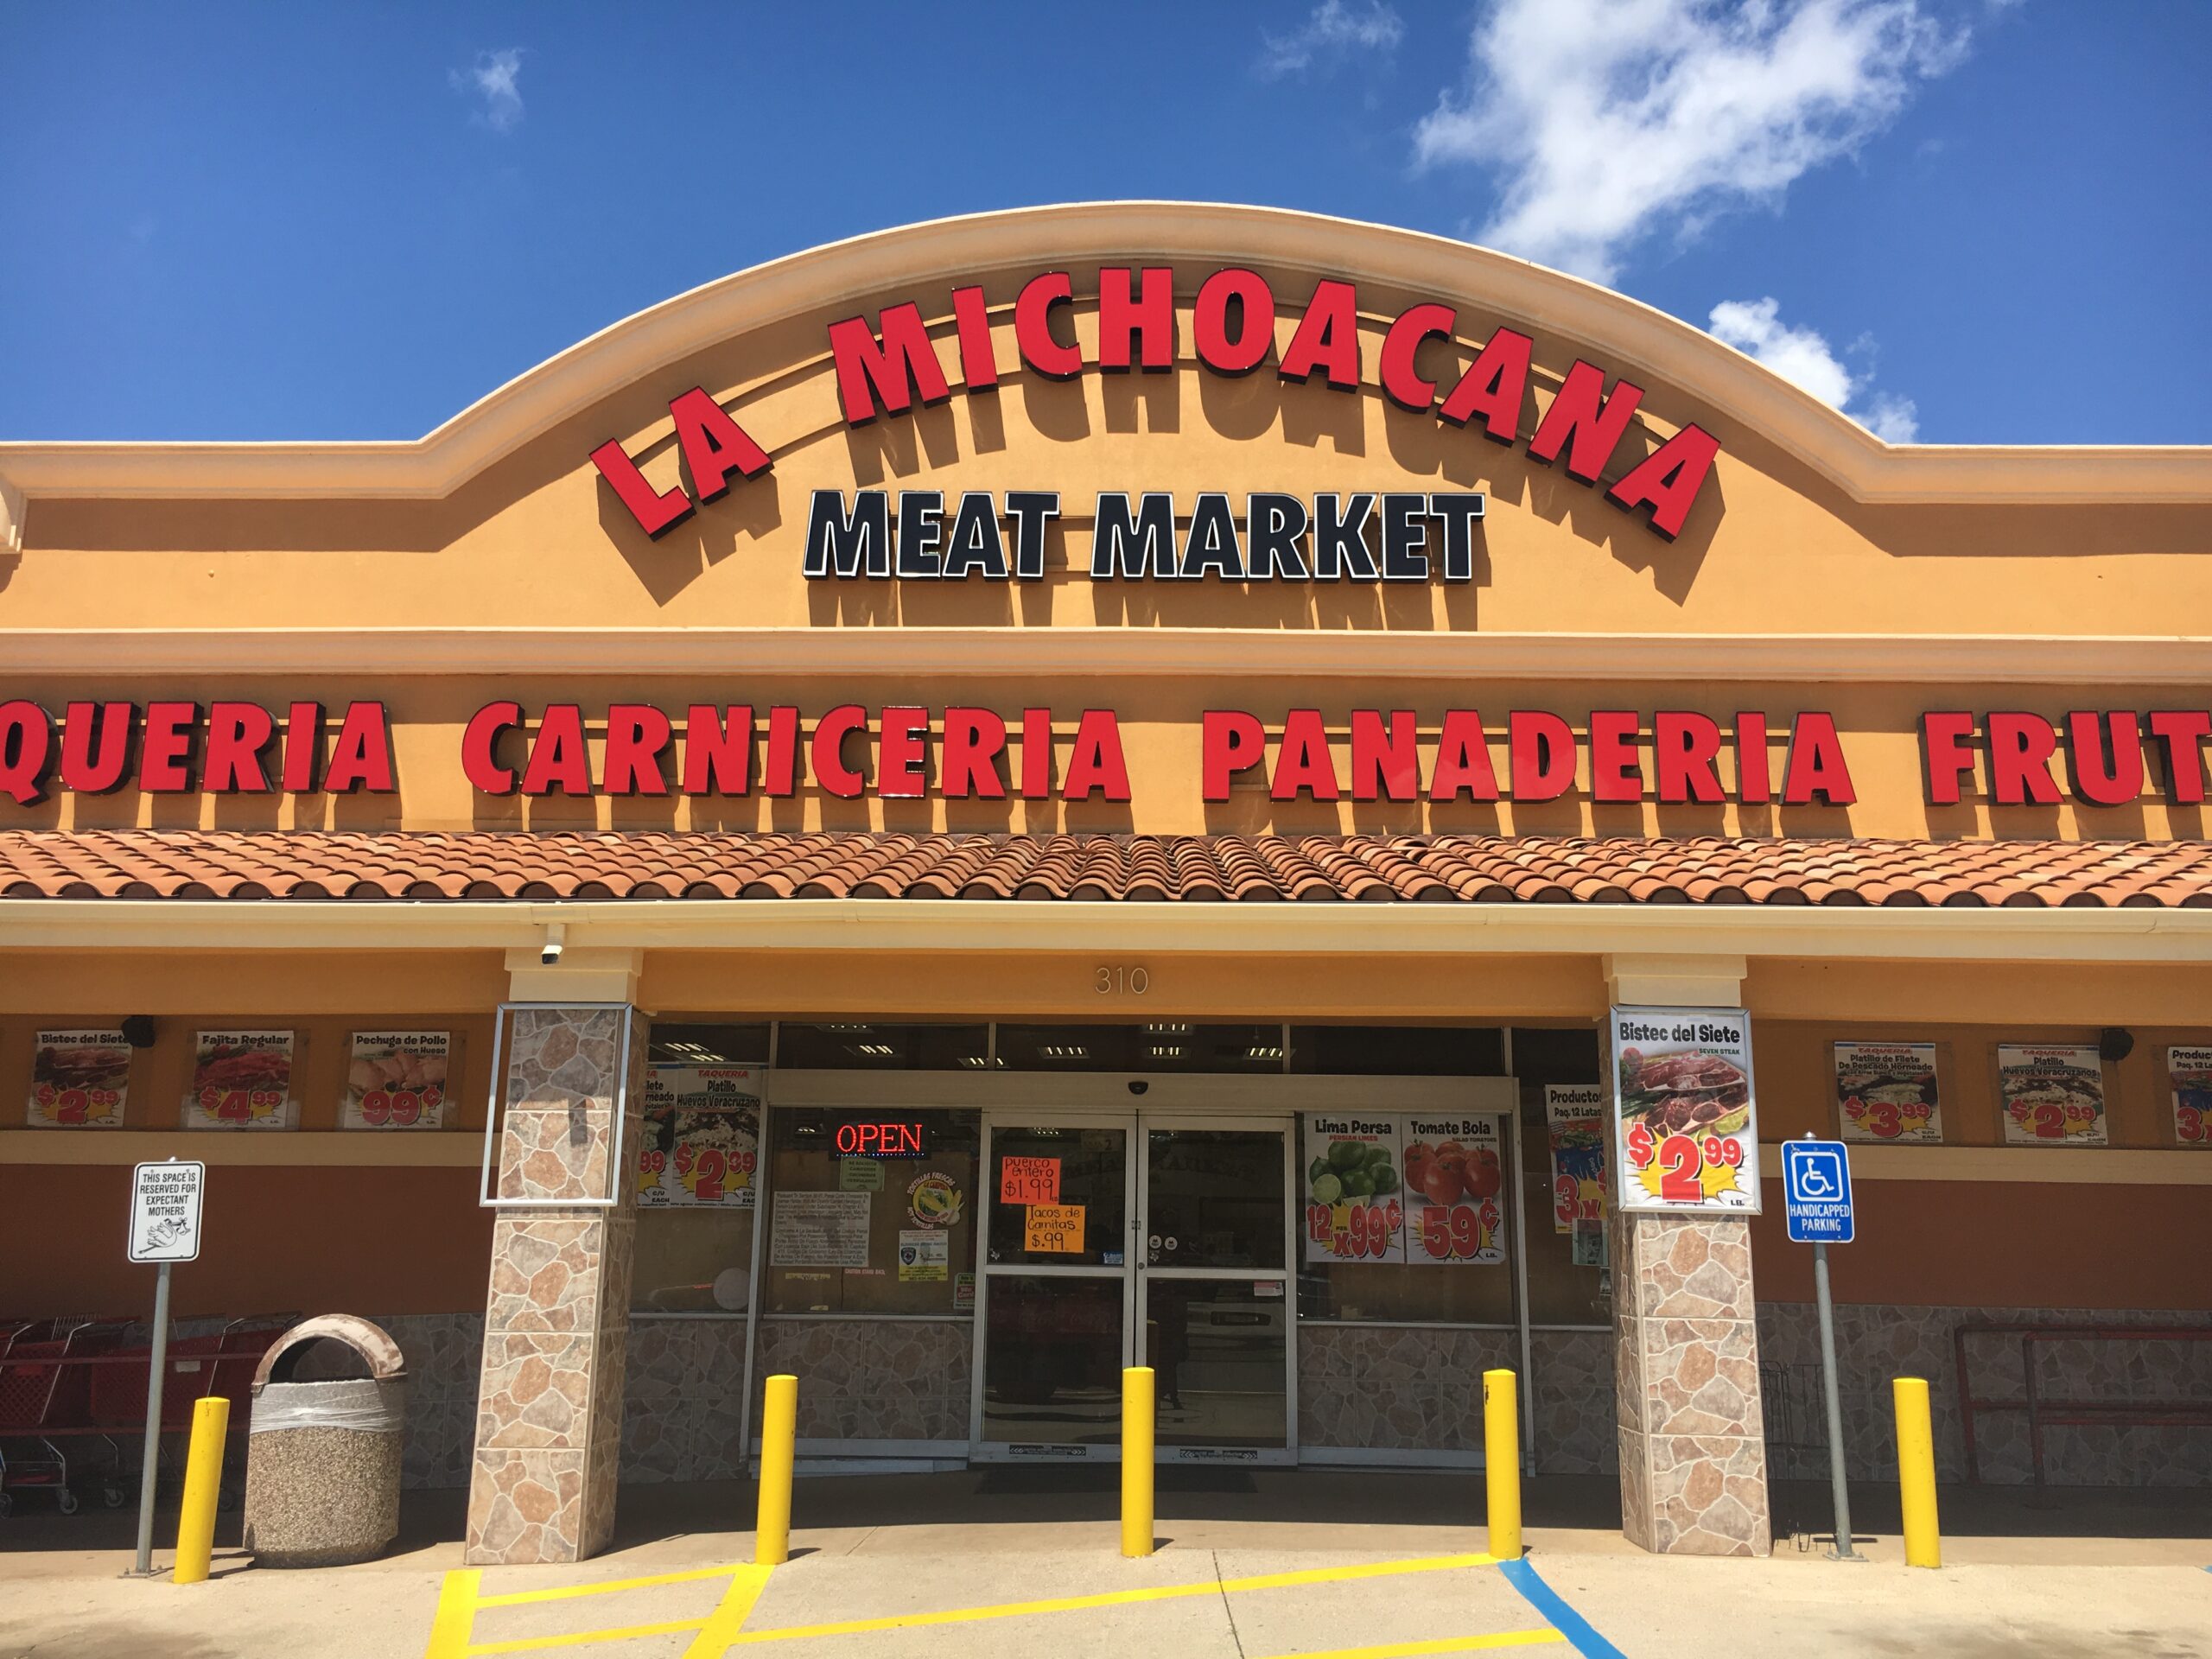 La michoacana meat market